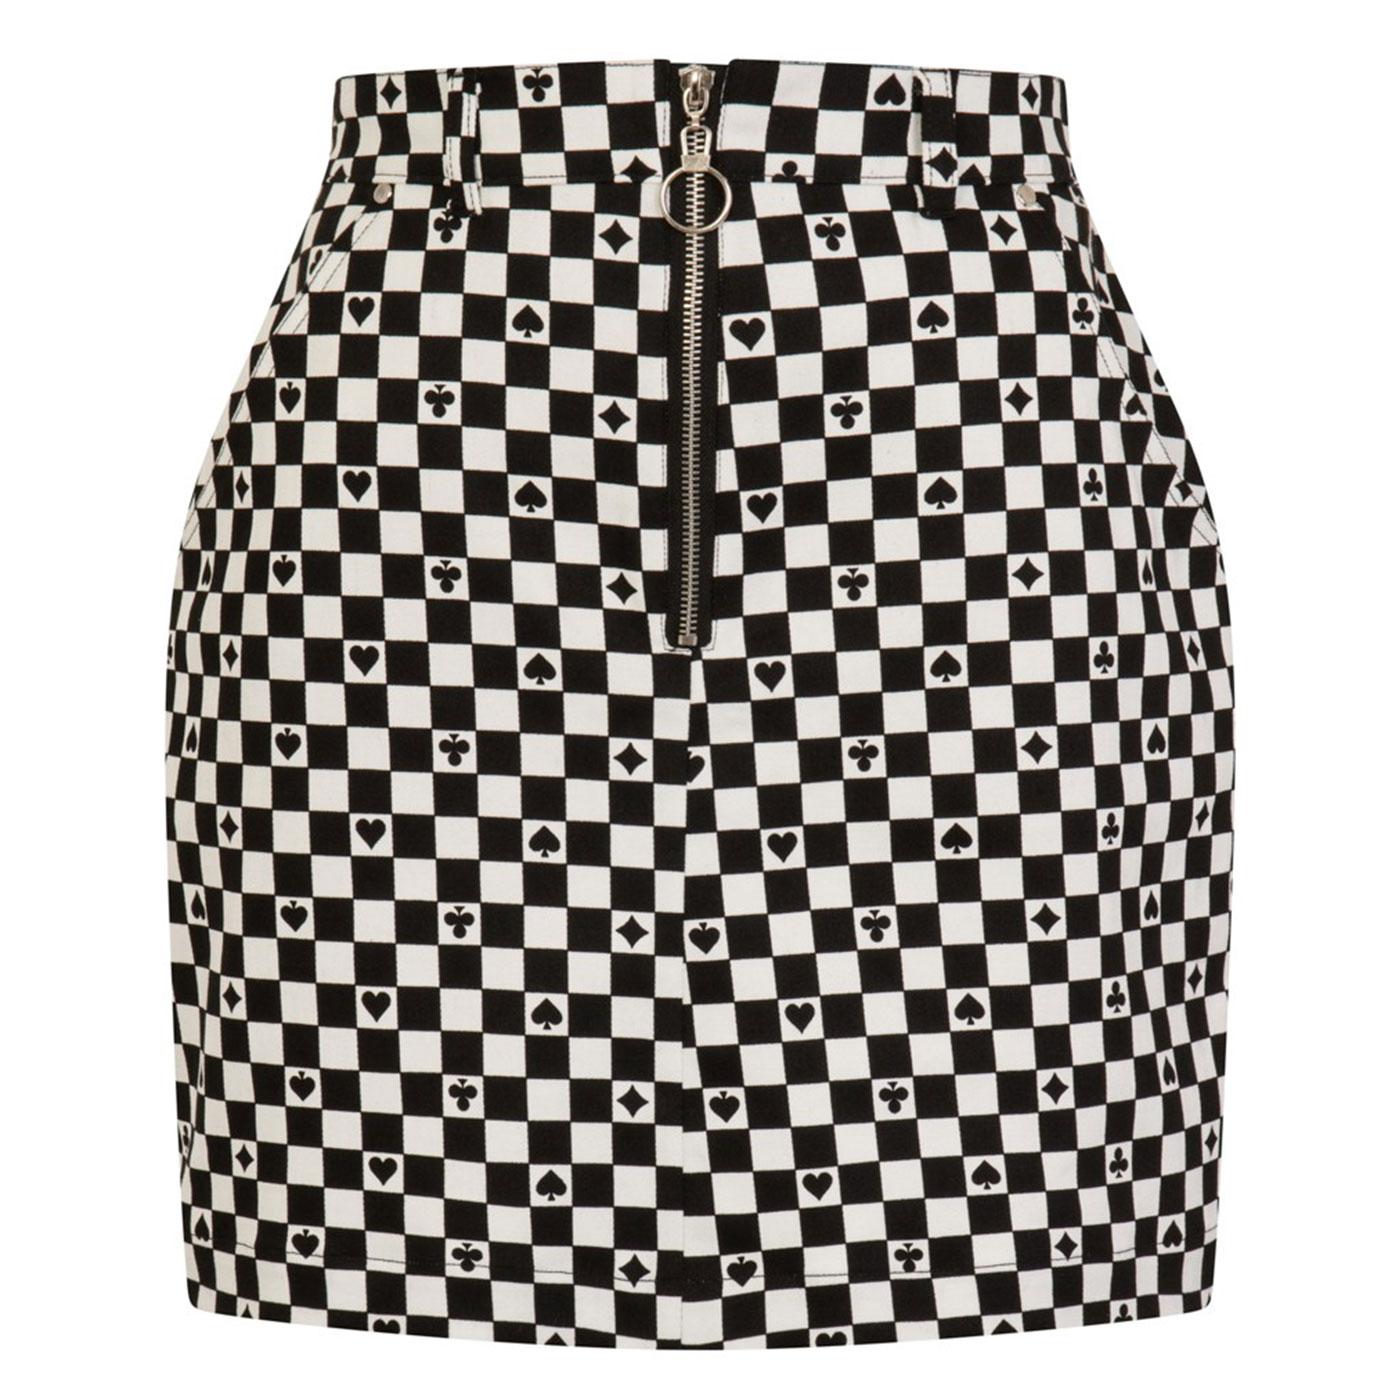 HELL BUNNY Pokerface Retro 60s Mod Mini Skirt